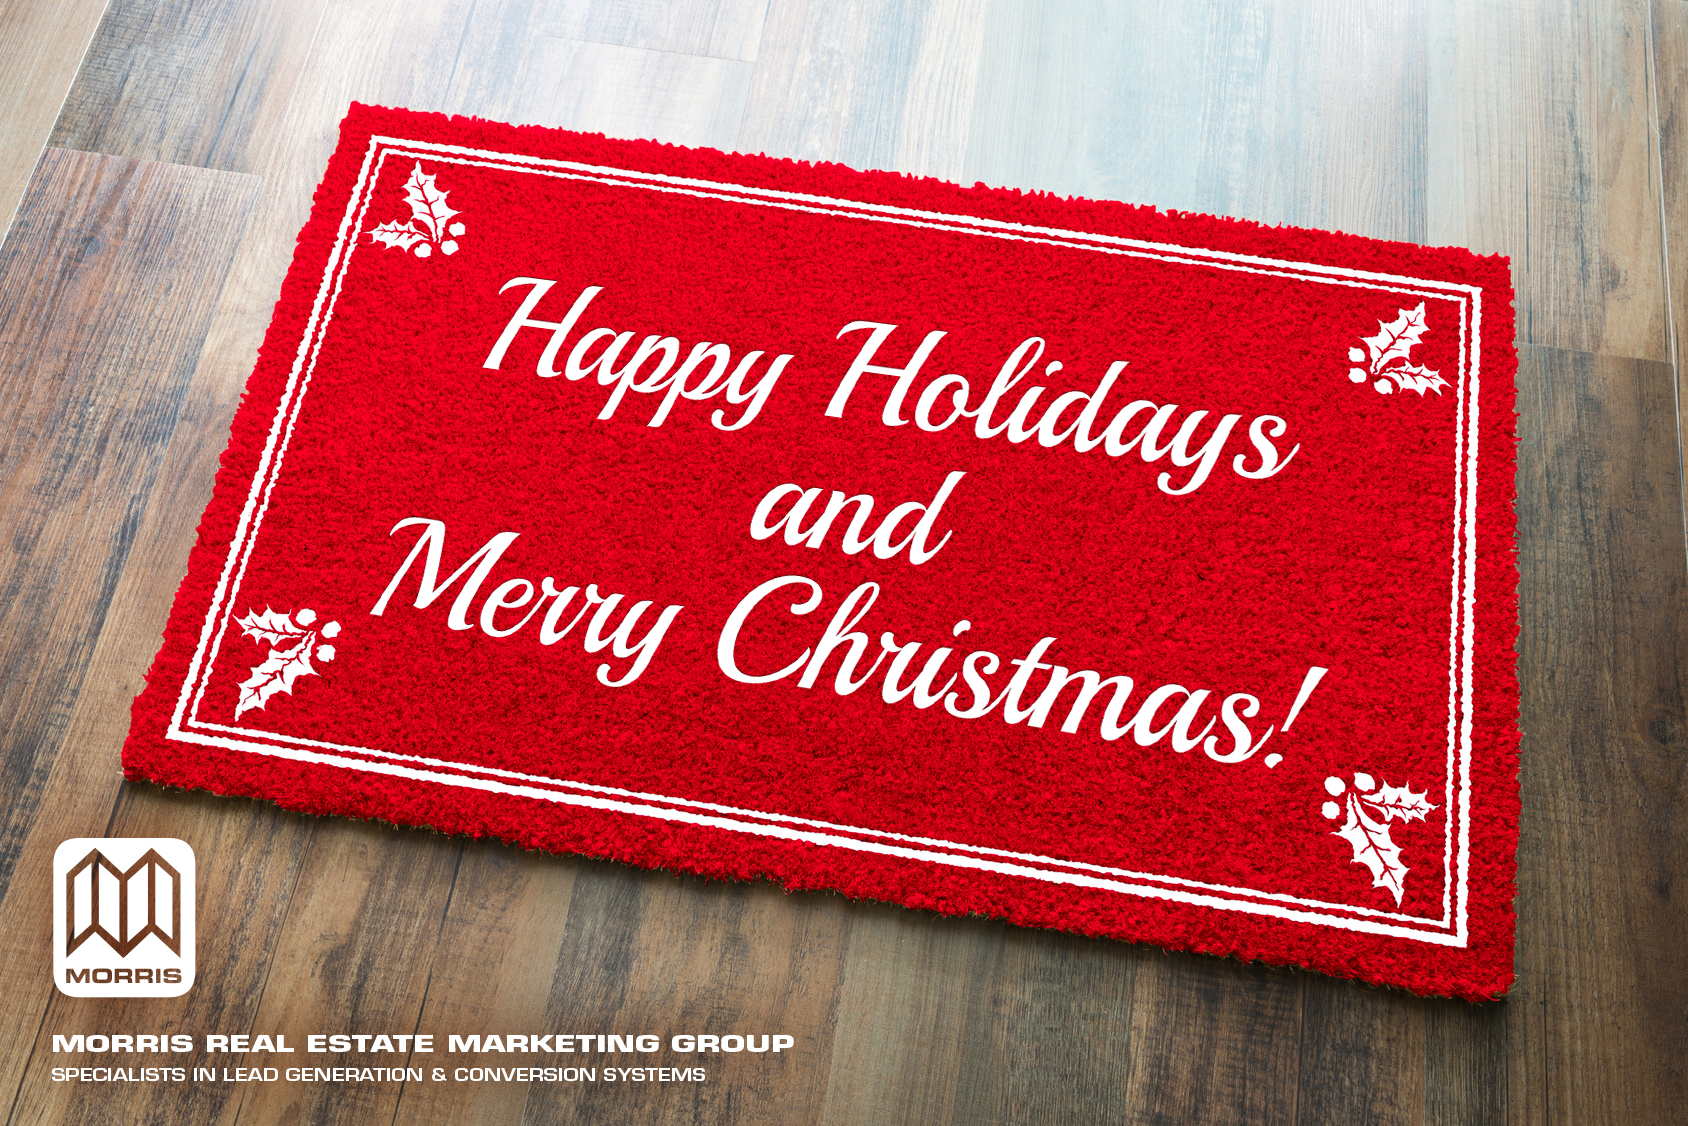 Happy Holiday Morris Marketing Group